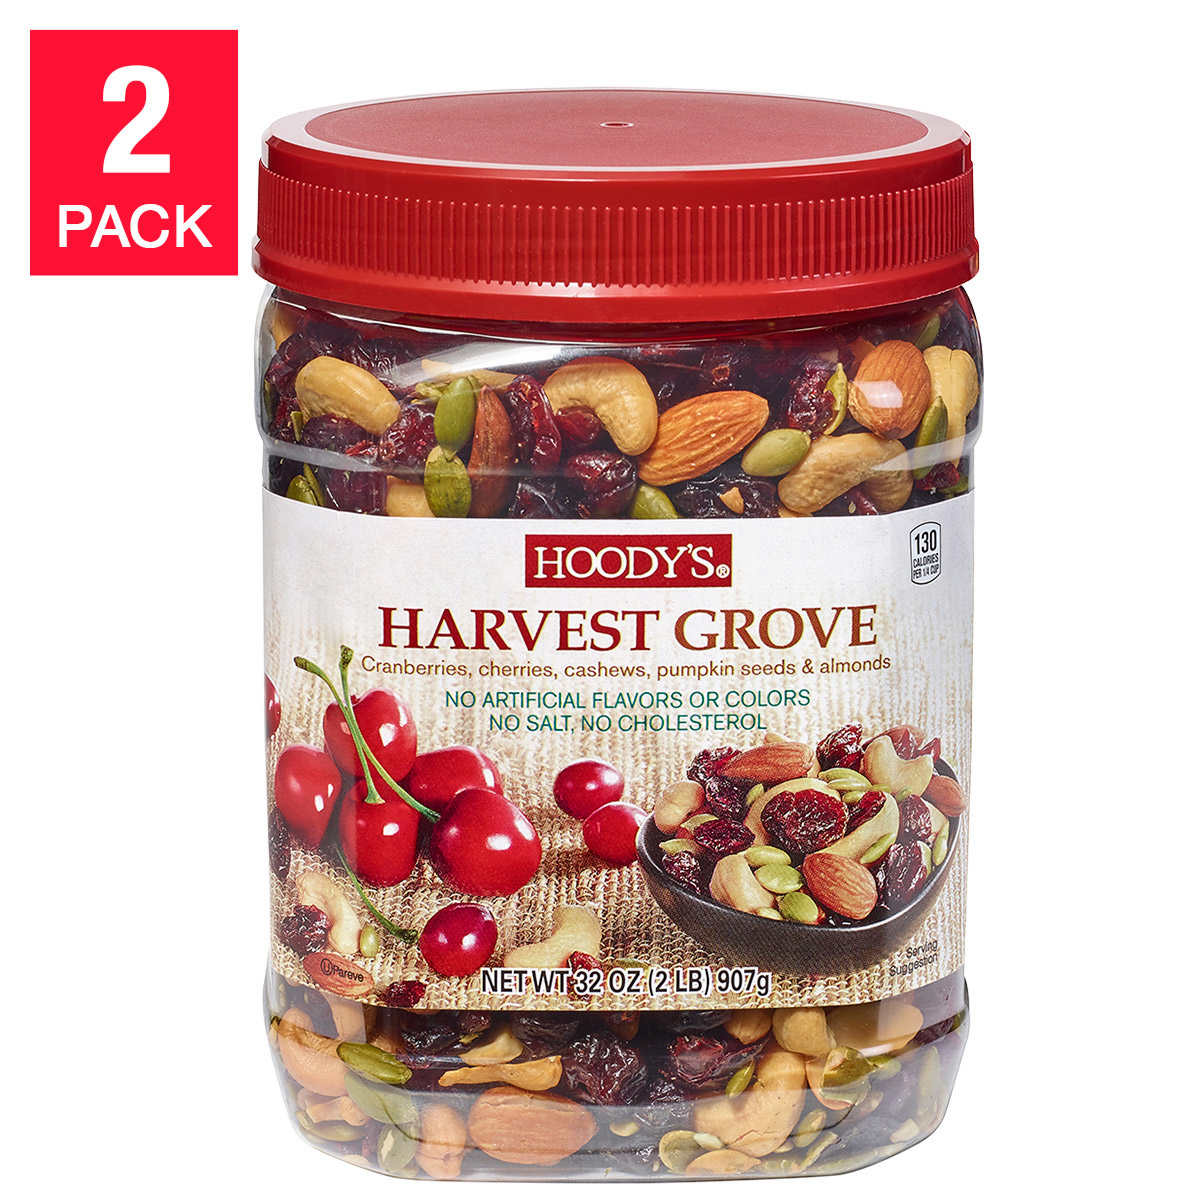 Hoody's Harvest Grove Trail Mix